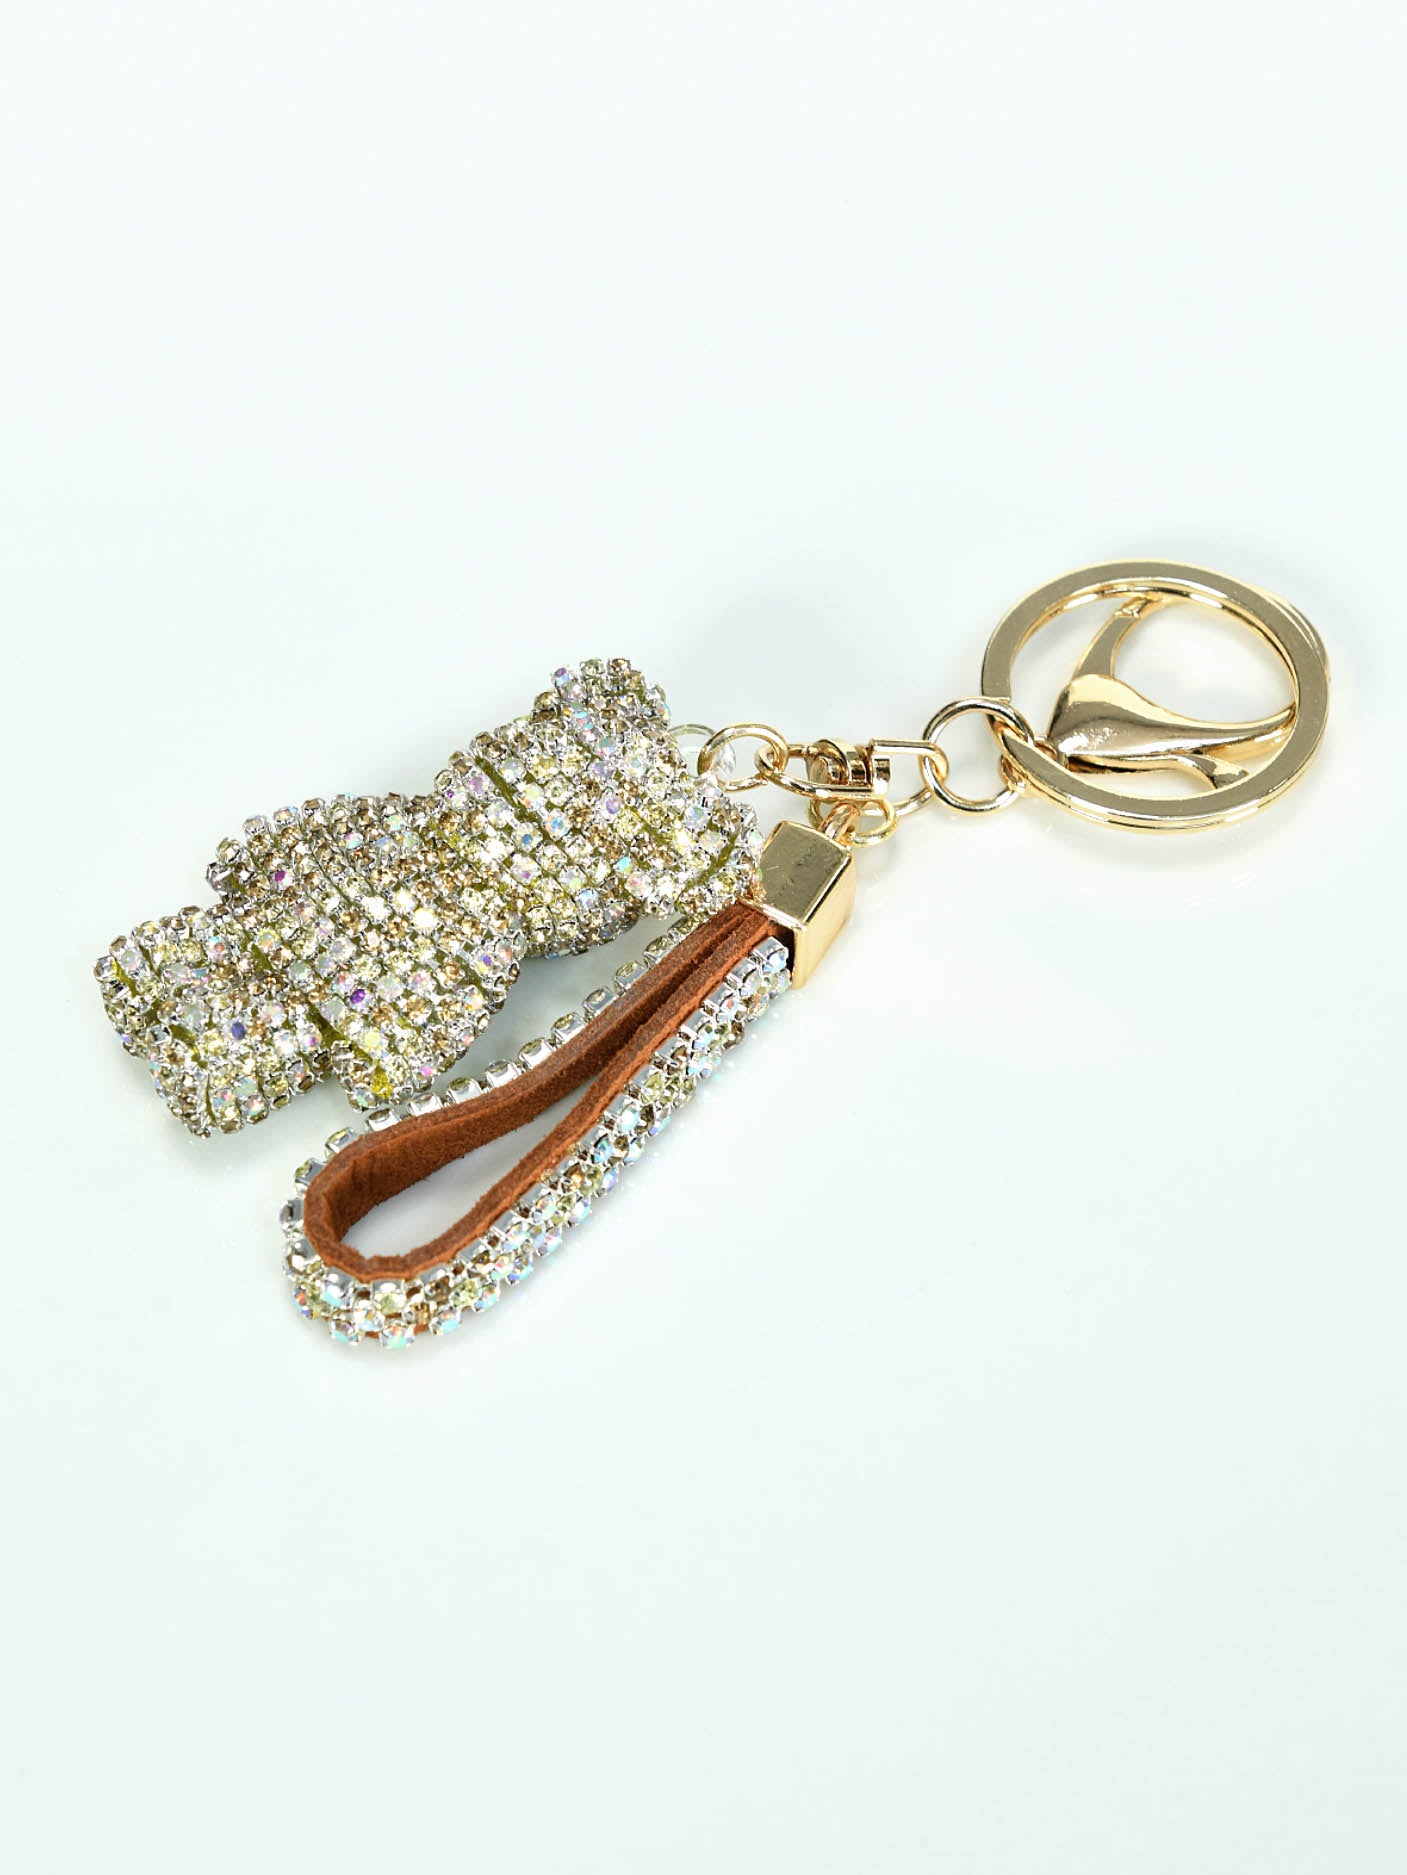 embellished-key-chain